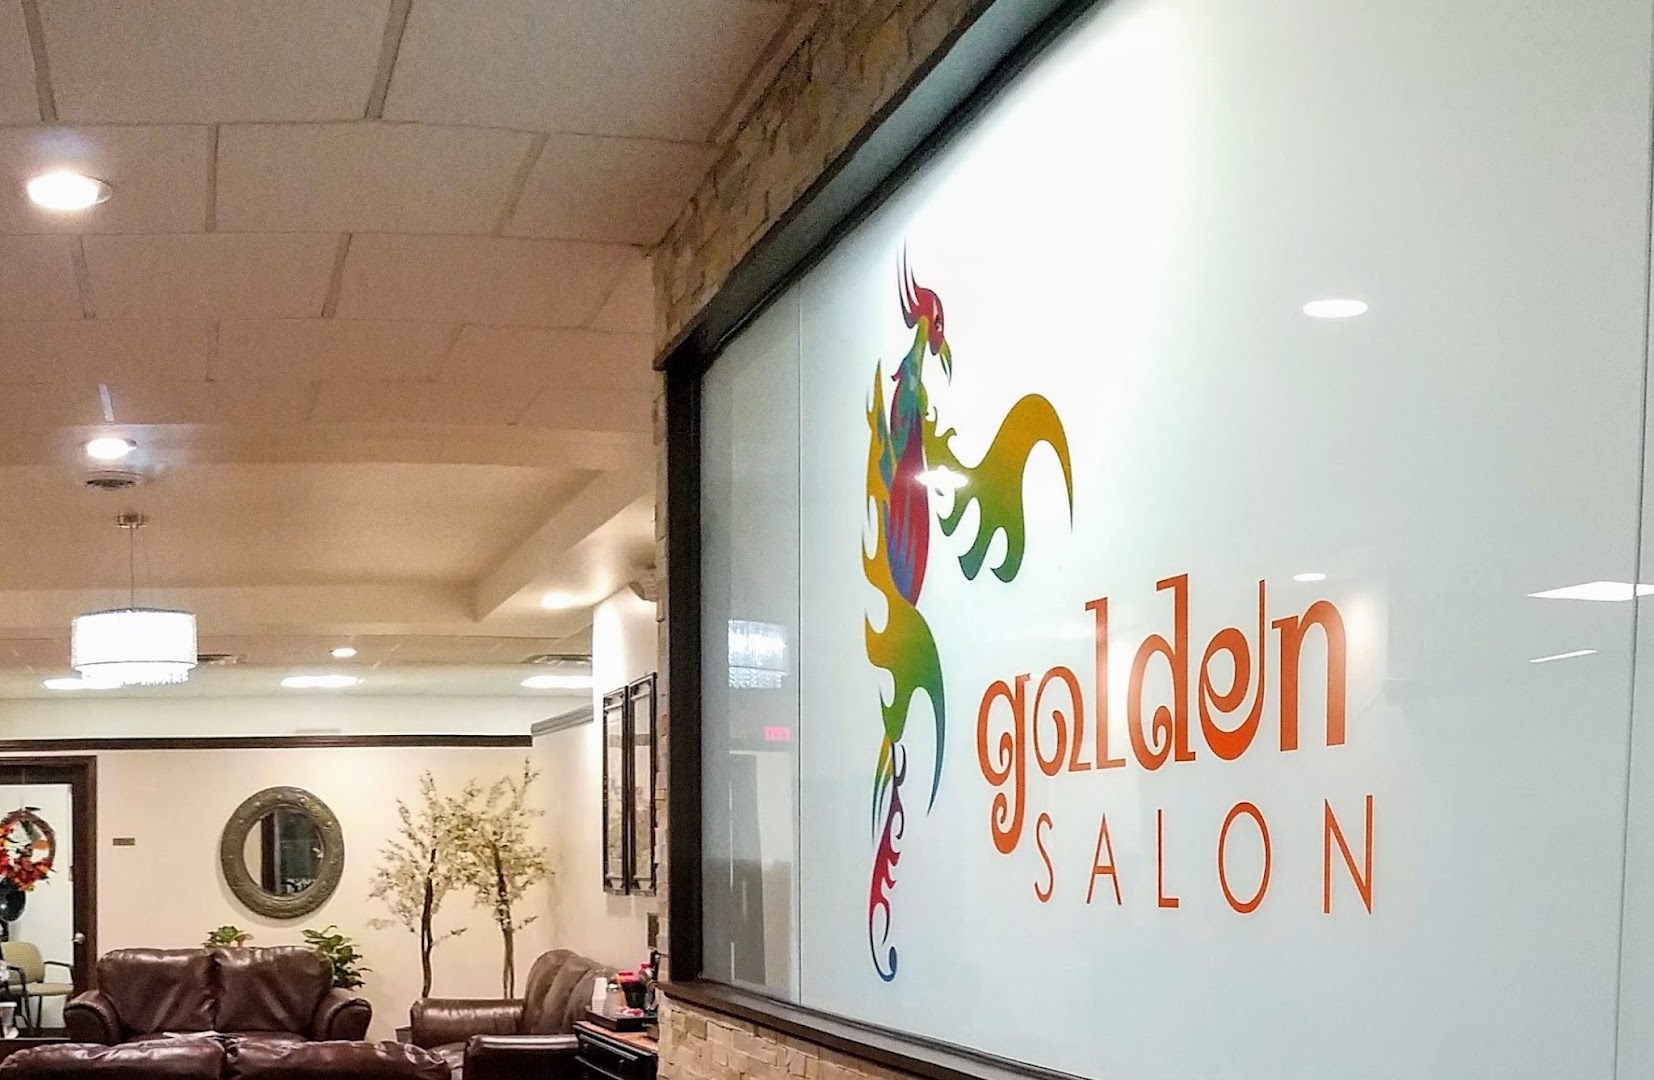 Golden Salon